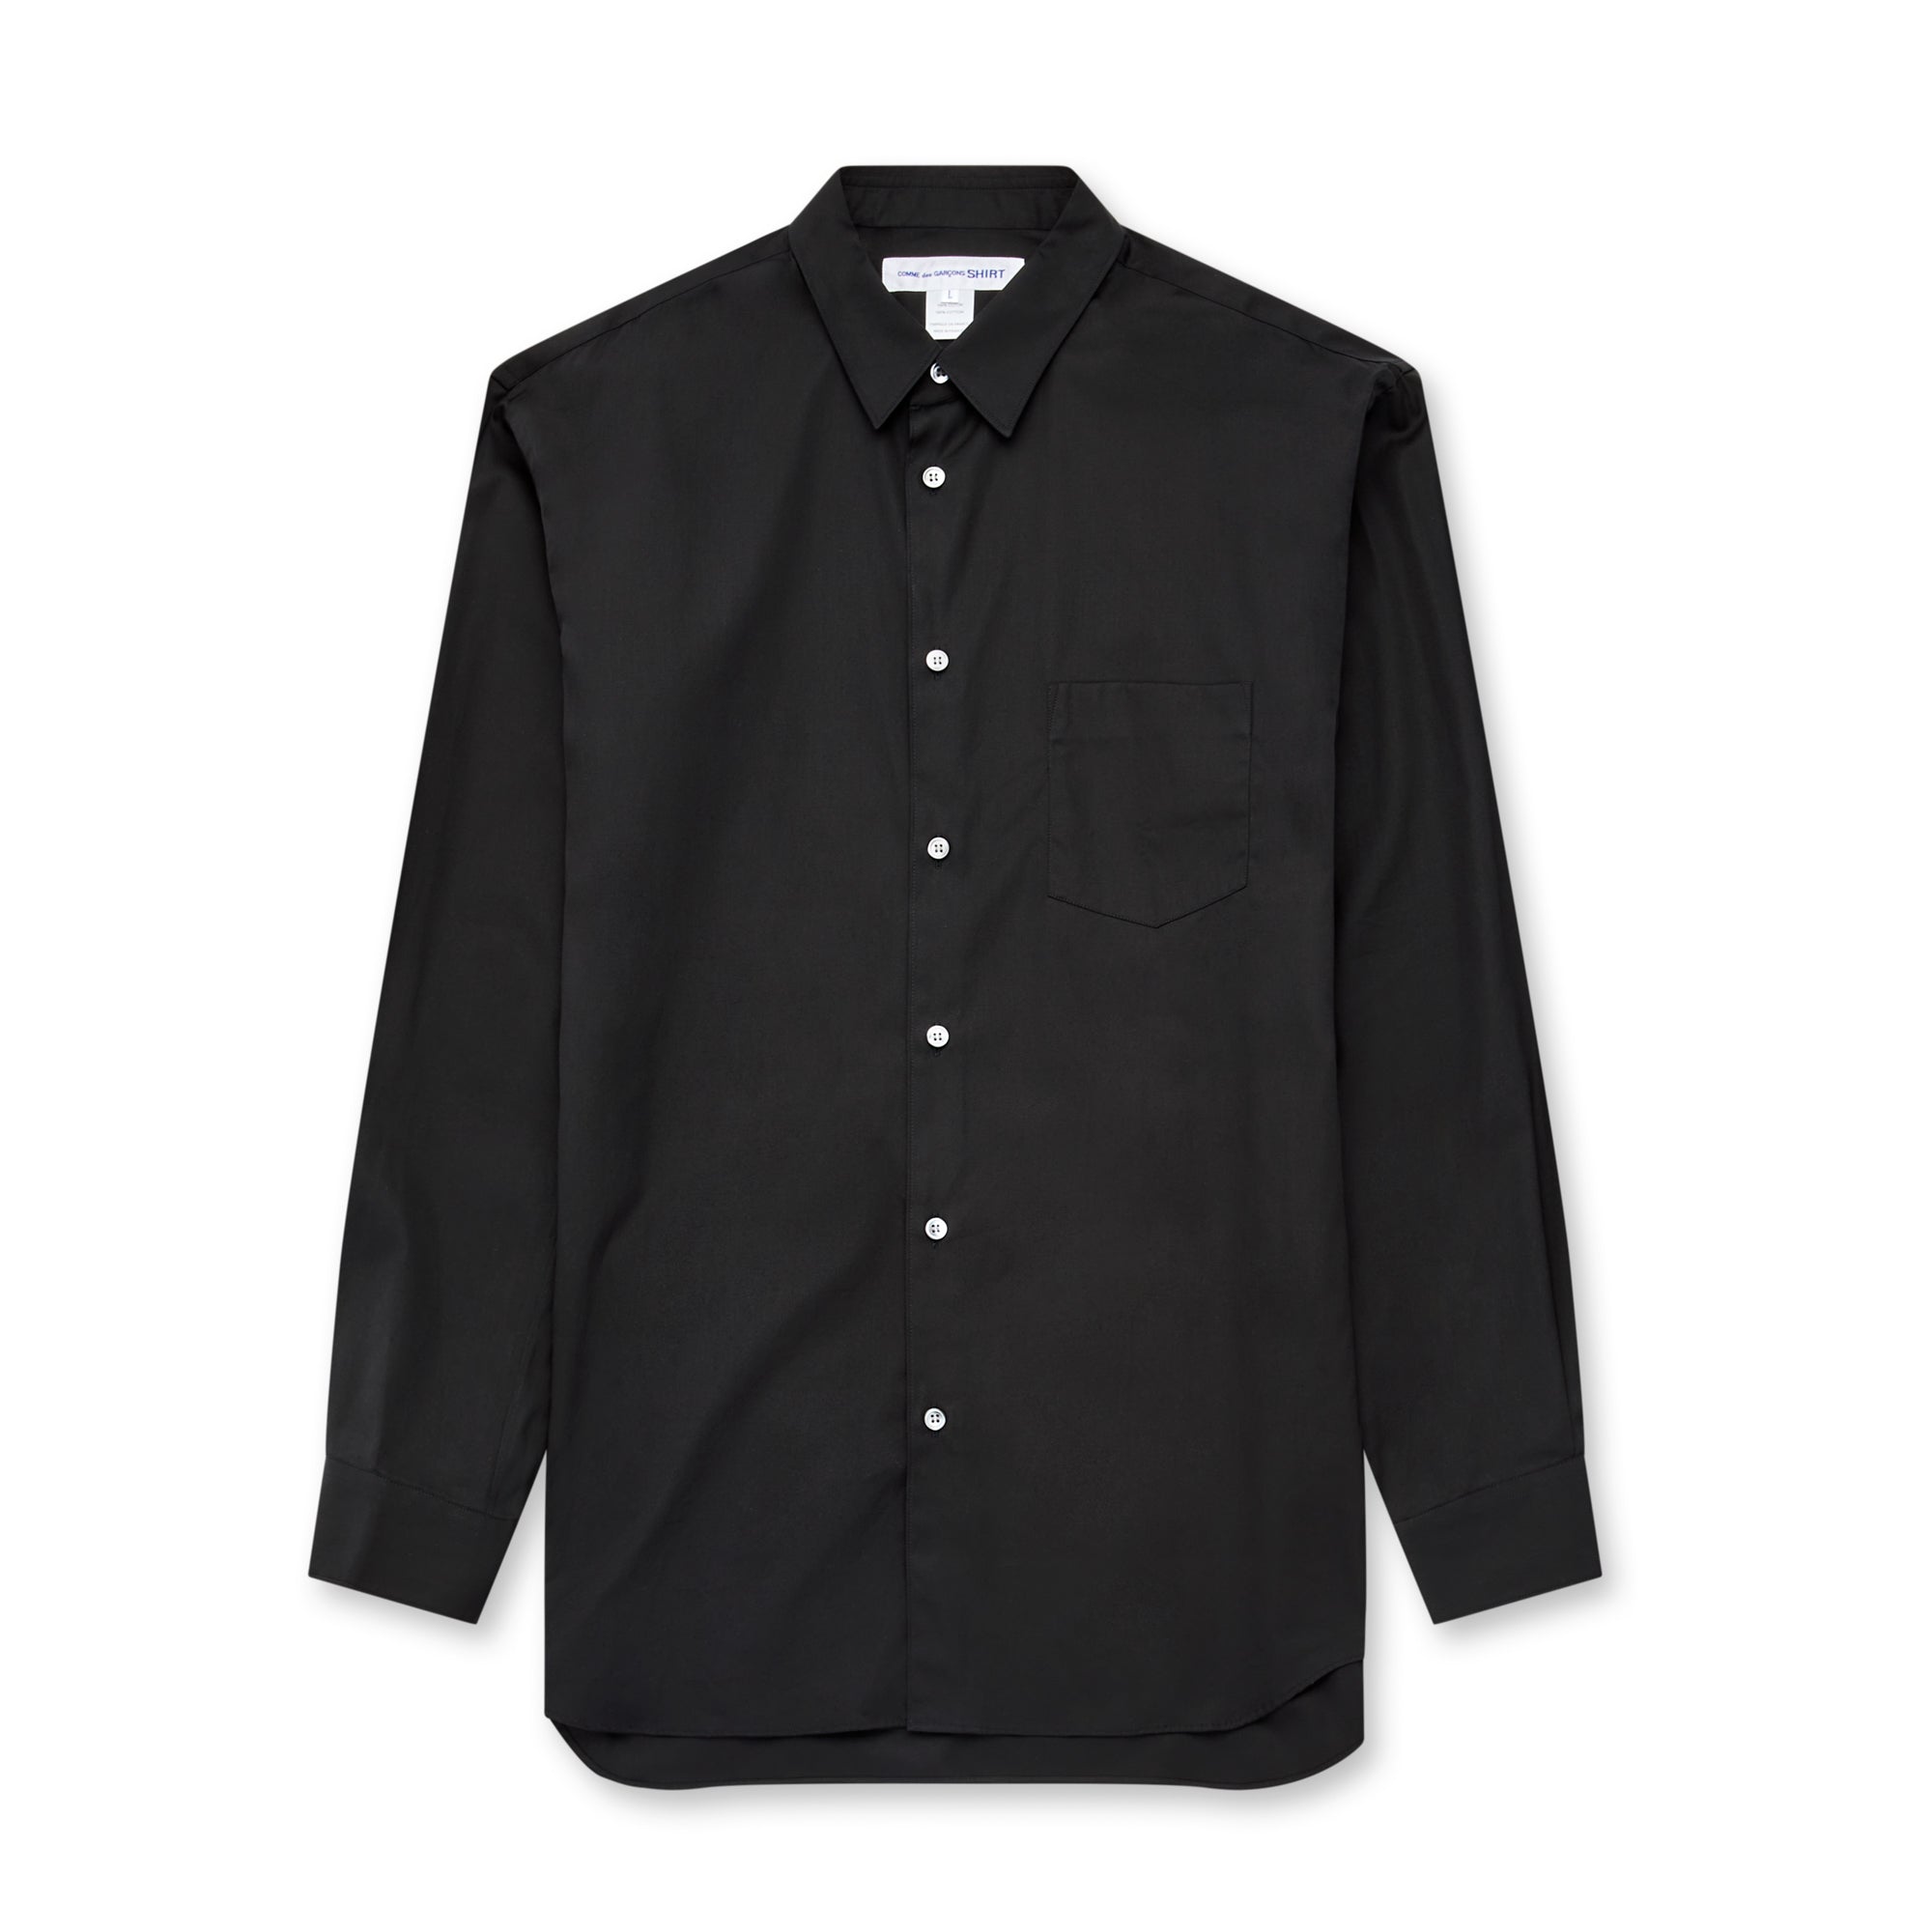 CDG Shirt Forever - Classic Fit Poplin Plain Shirt - (Black) view 5